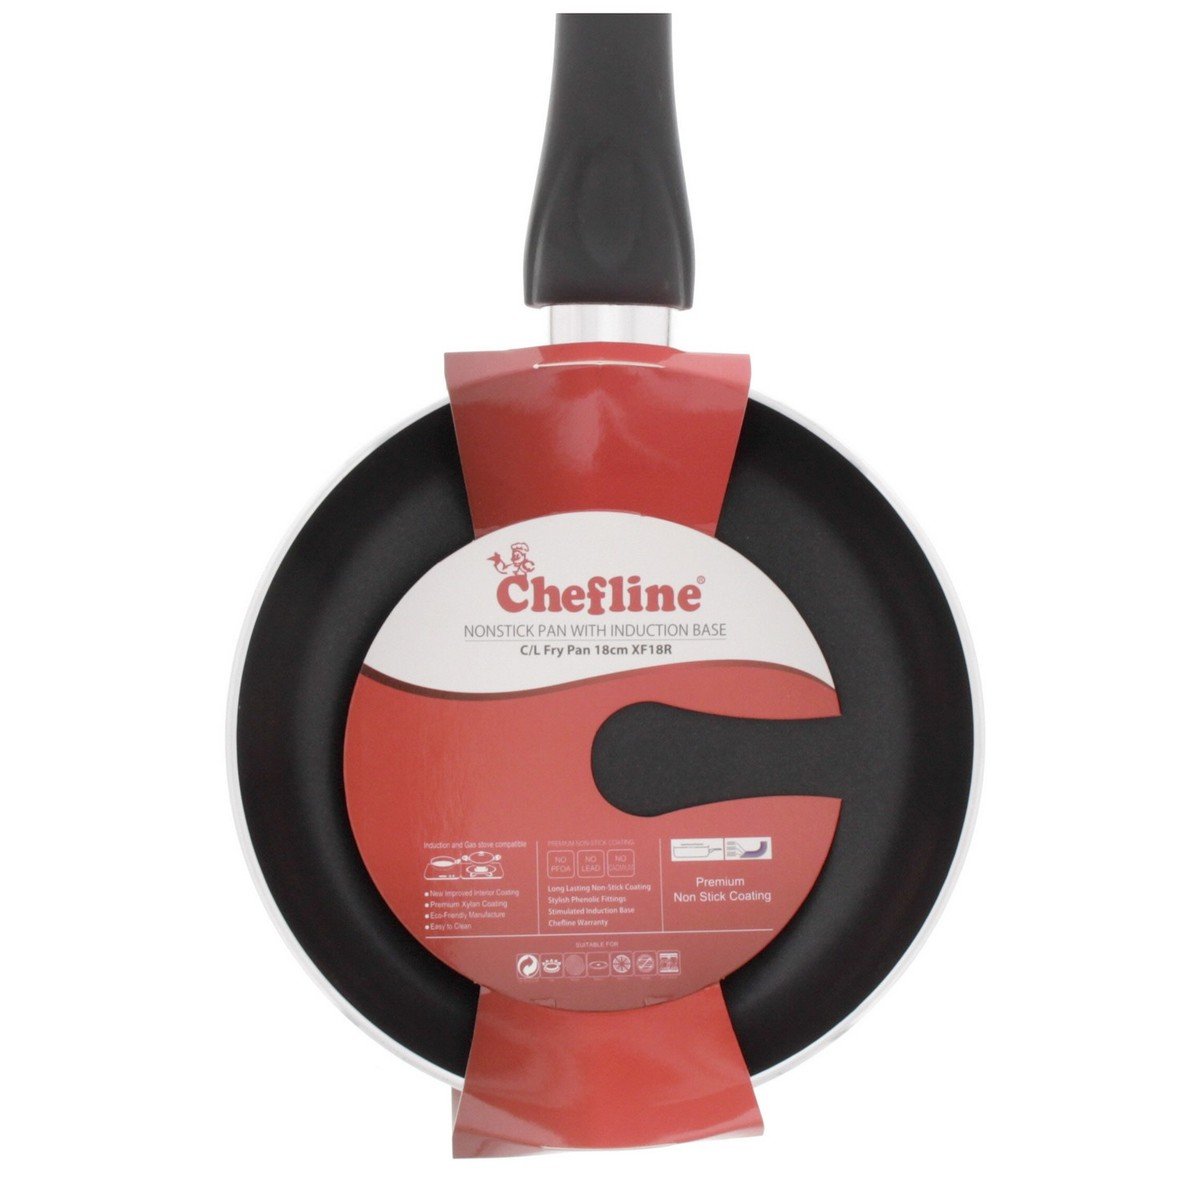 Chefline Non-Stick Fry Pan, 18 cm, XF18R